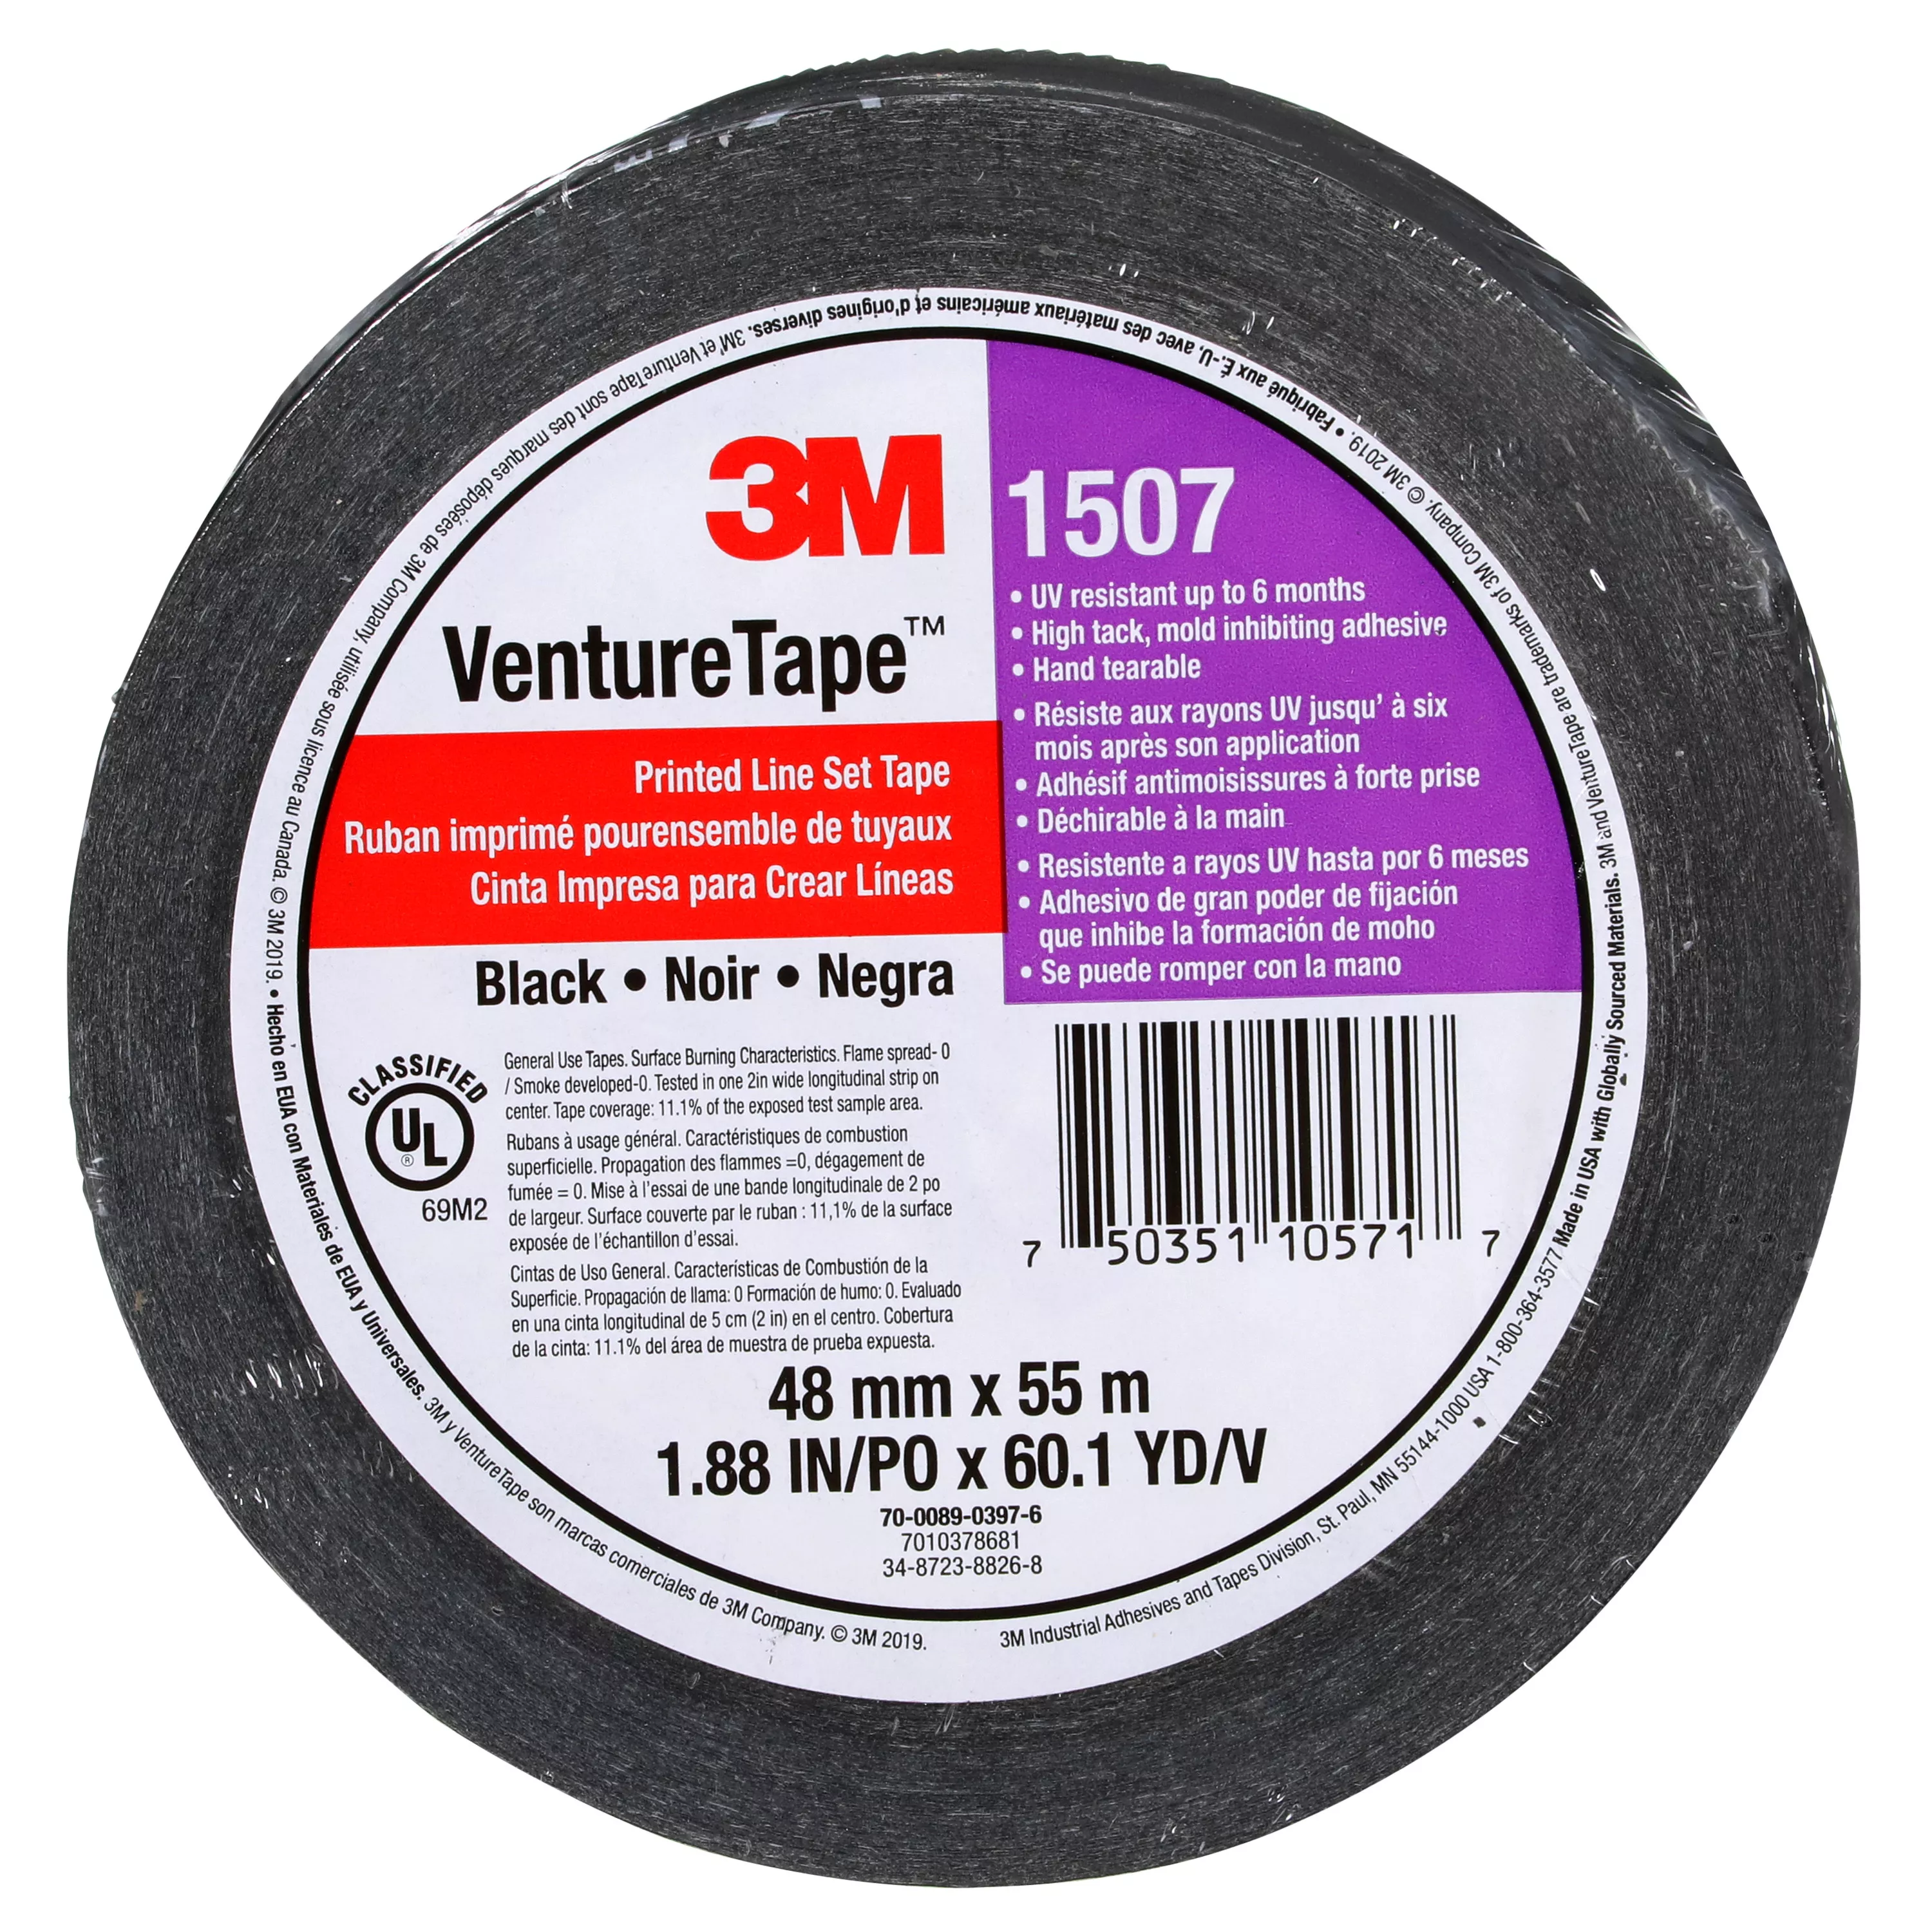 3M™ Venture Tape™ Printed Line Set Tape 1507, Black, 48 mm x 55 m, 24 Rolls/Case